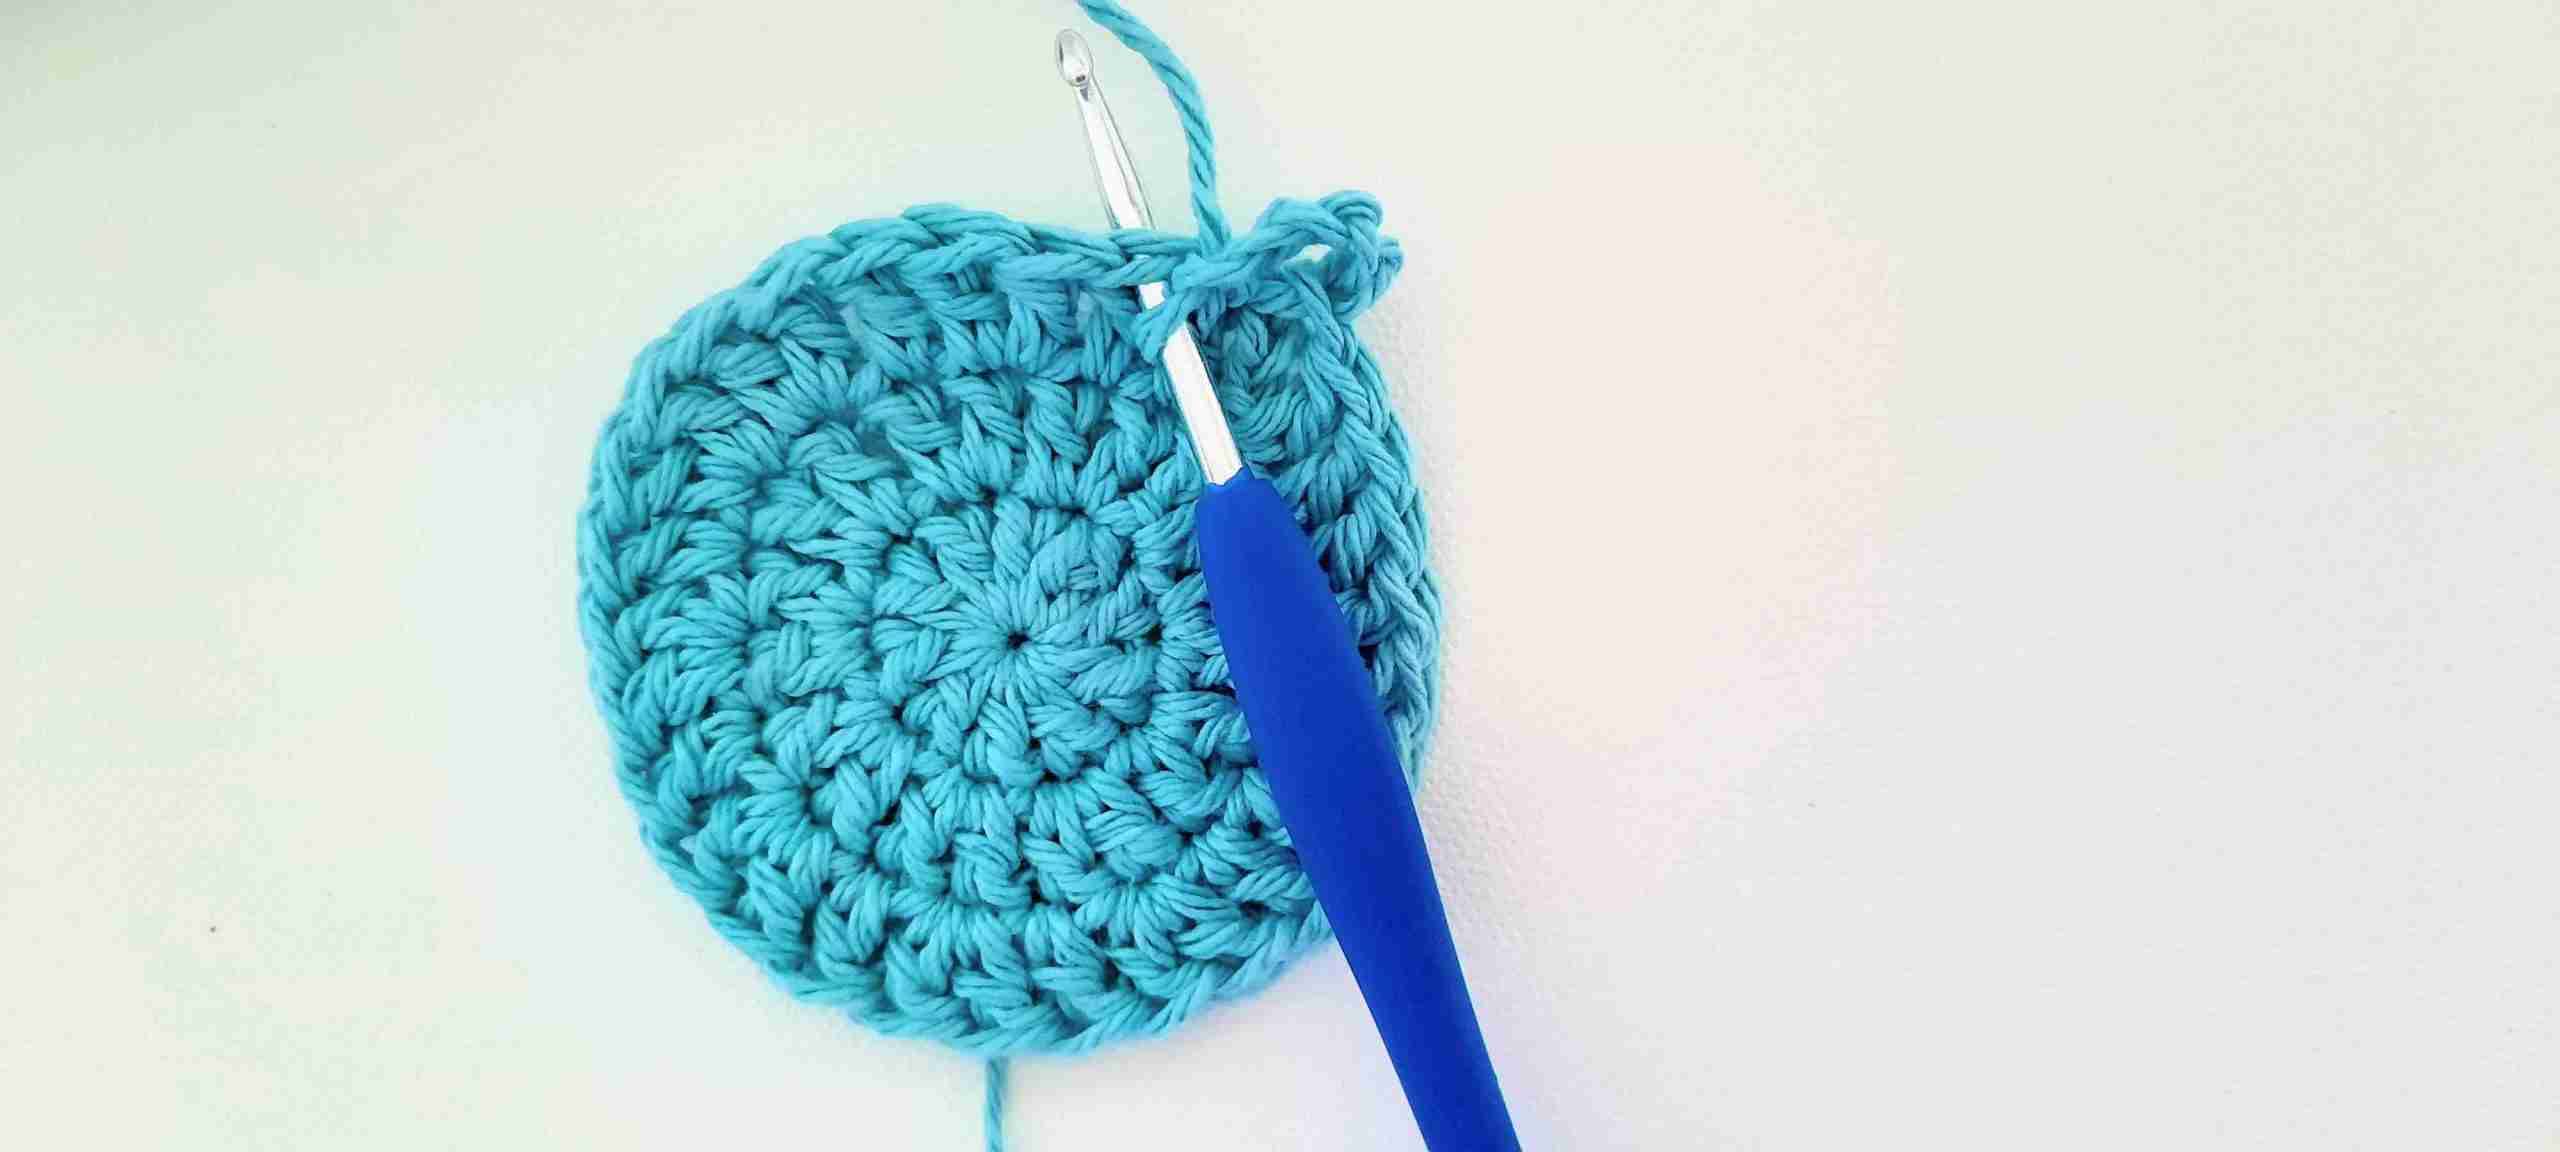 Coaster Crochet Pattern Free - Start Edging